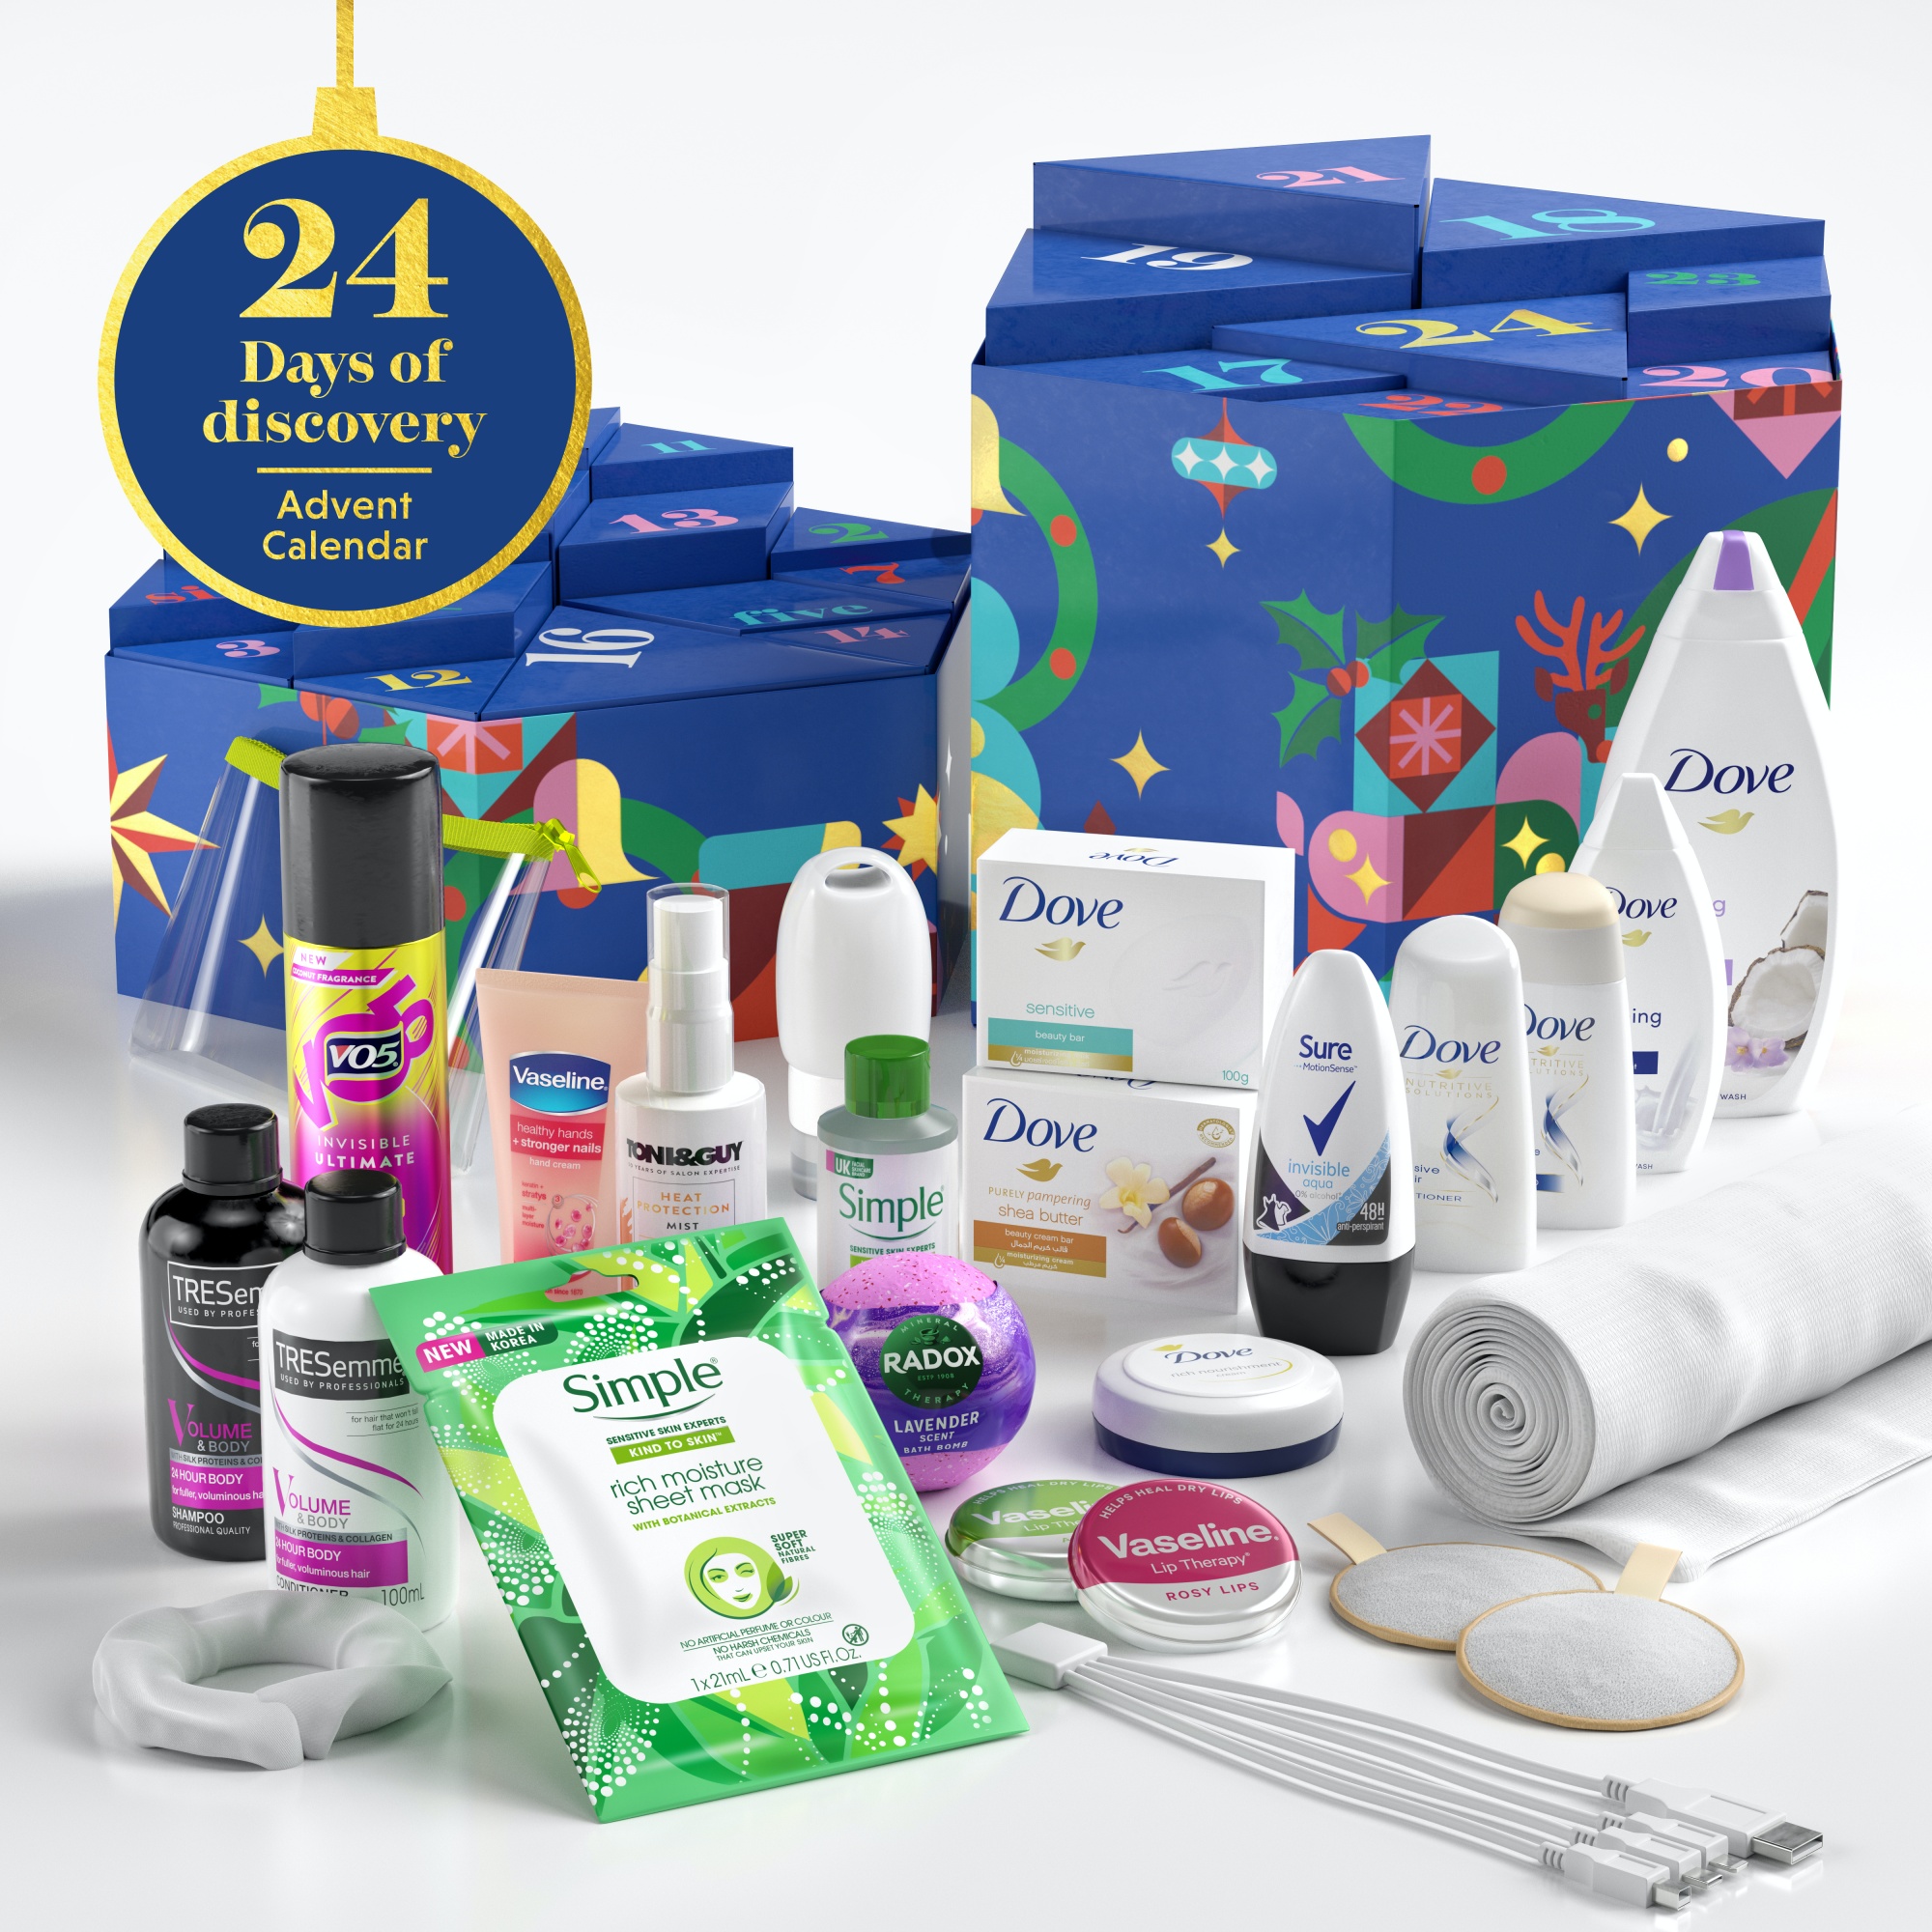 Unilever Mixed Brand Advent Calendar 2021